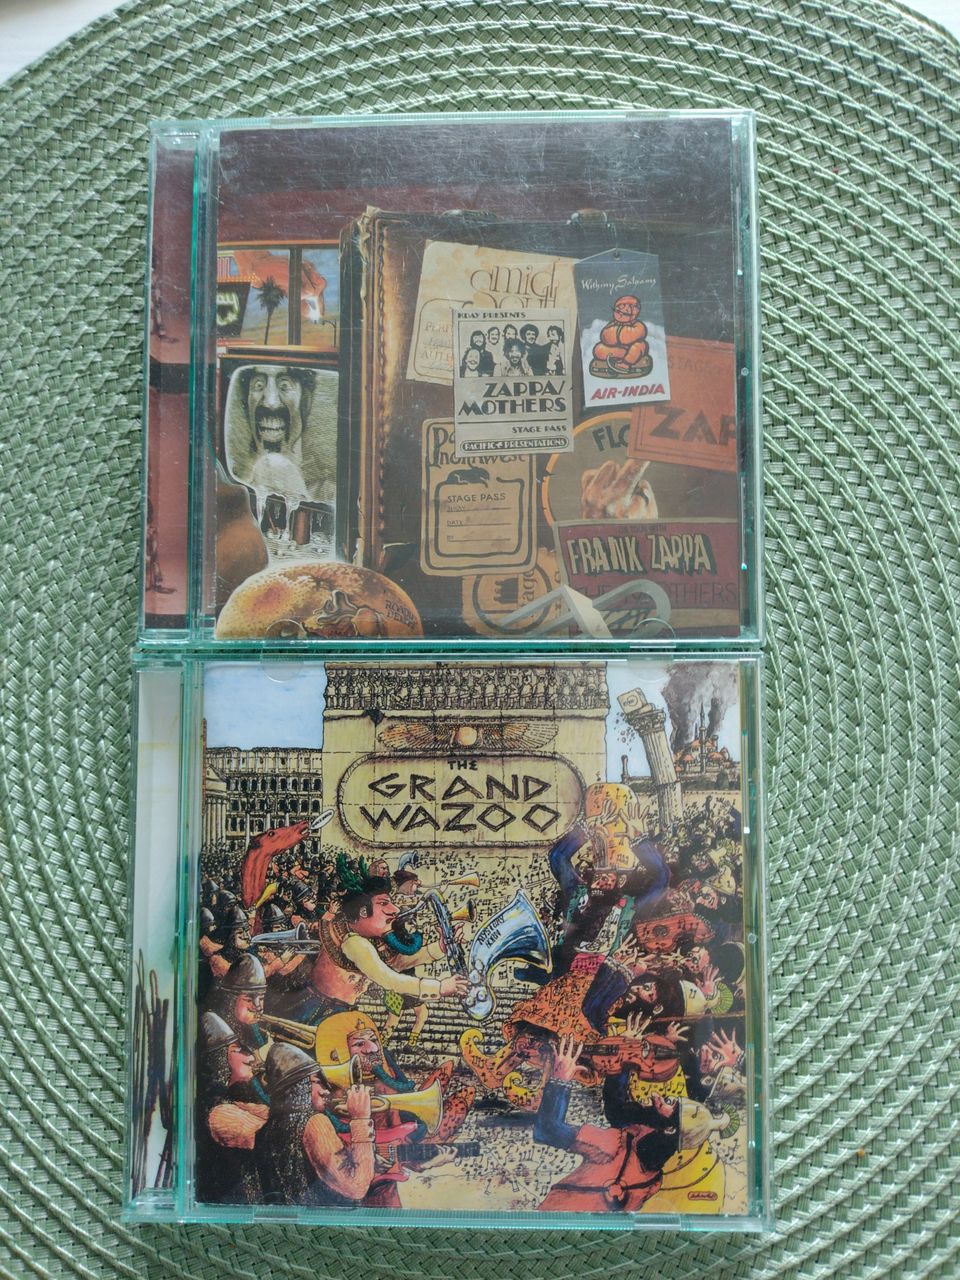 Frank Zappa cd